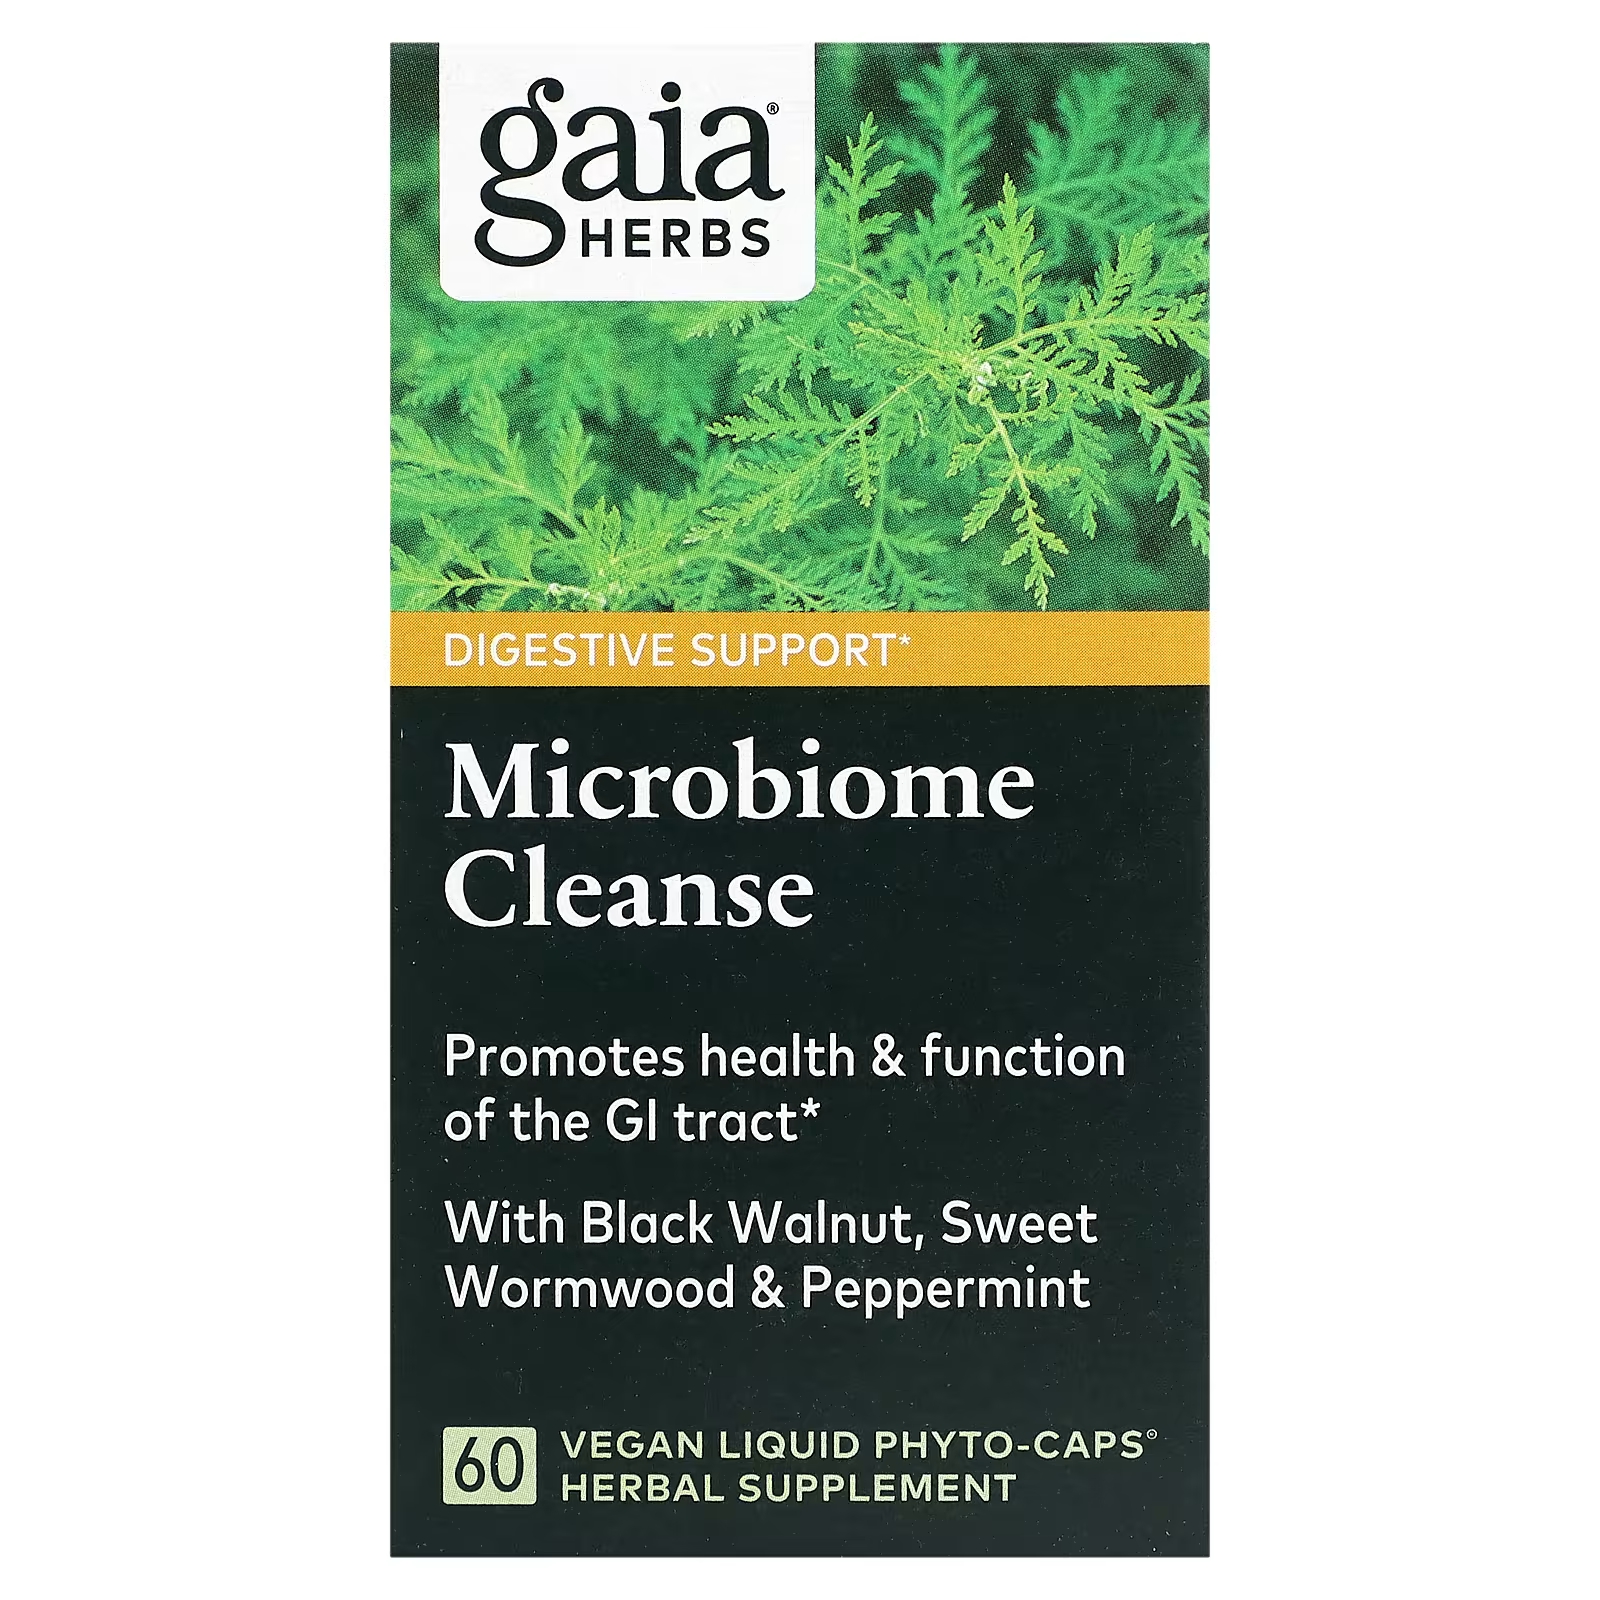 Растительная добавка Gaia Herbs Microbiome Cleanse, 60 жидких фитокапсул растительная добавка gaia herbs quick defense 20 жидких фитокапсул